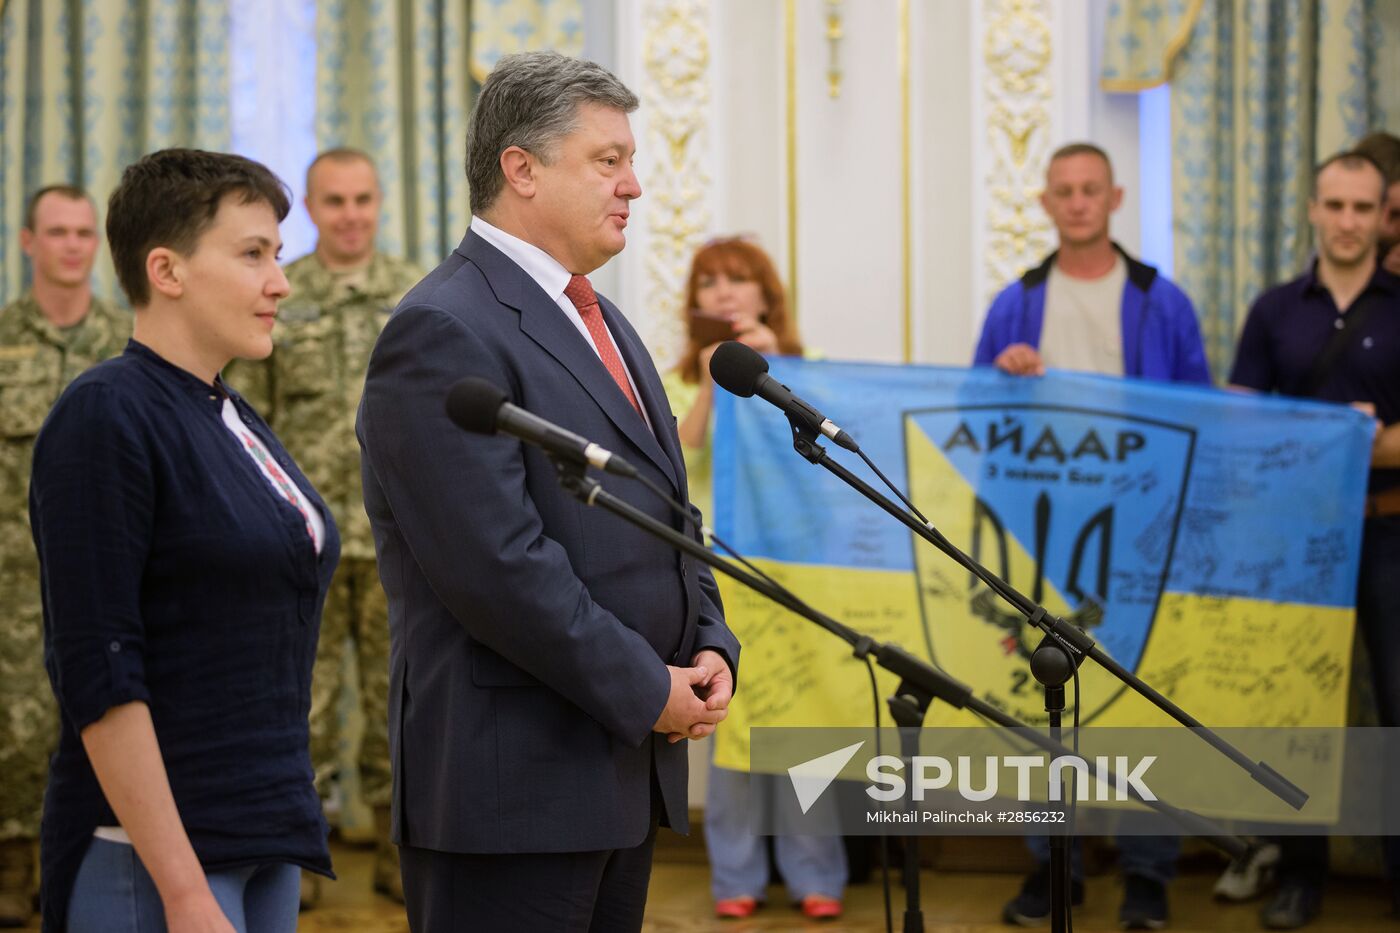 Ukrainian President Petro Poroshenko awards Nadezhda Savchenko the Order of Gold Star